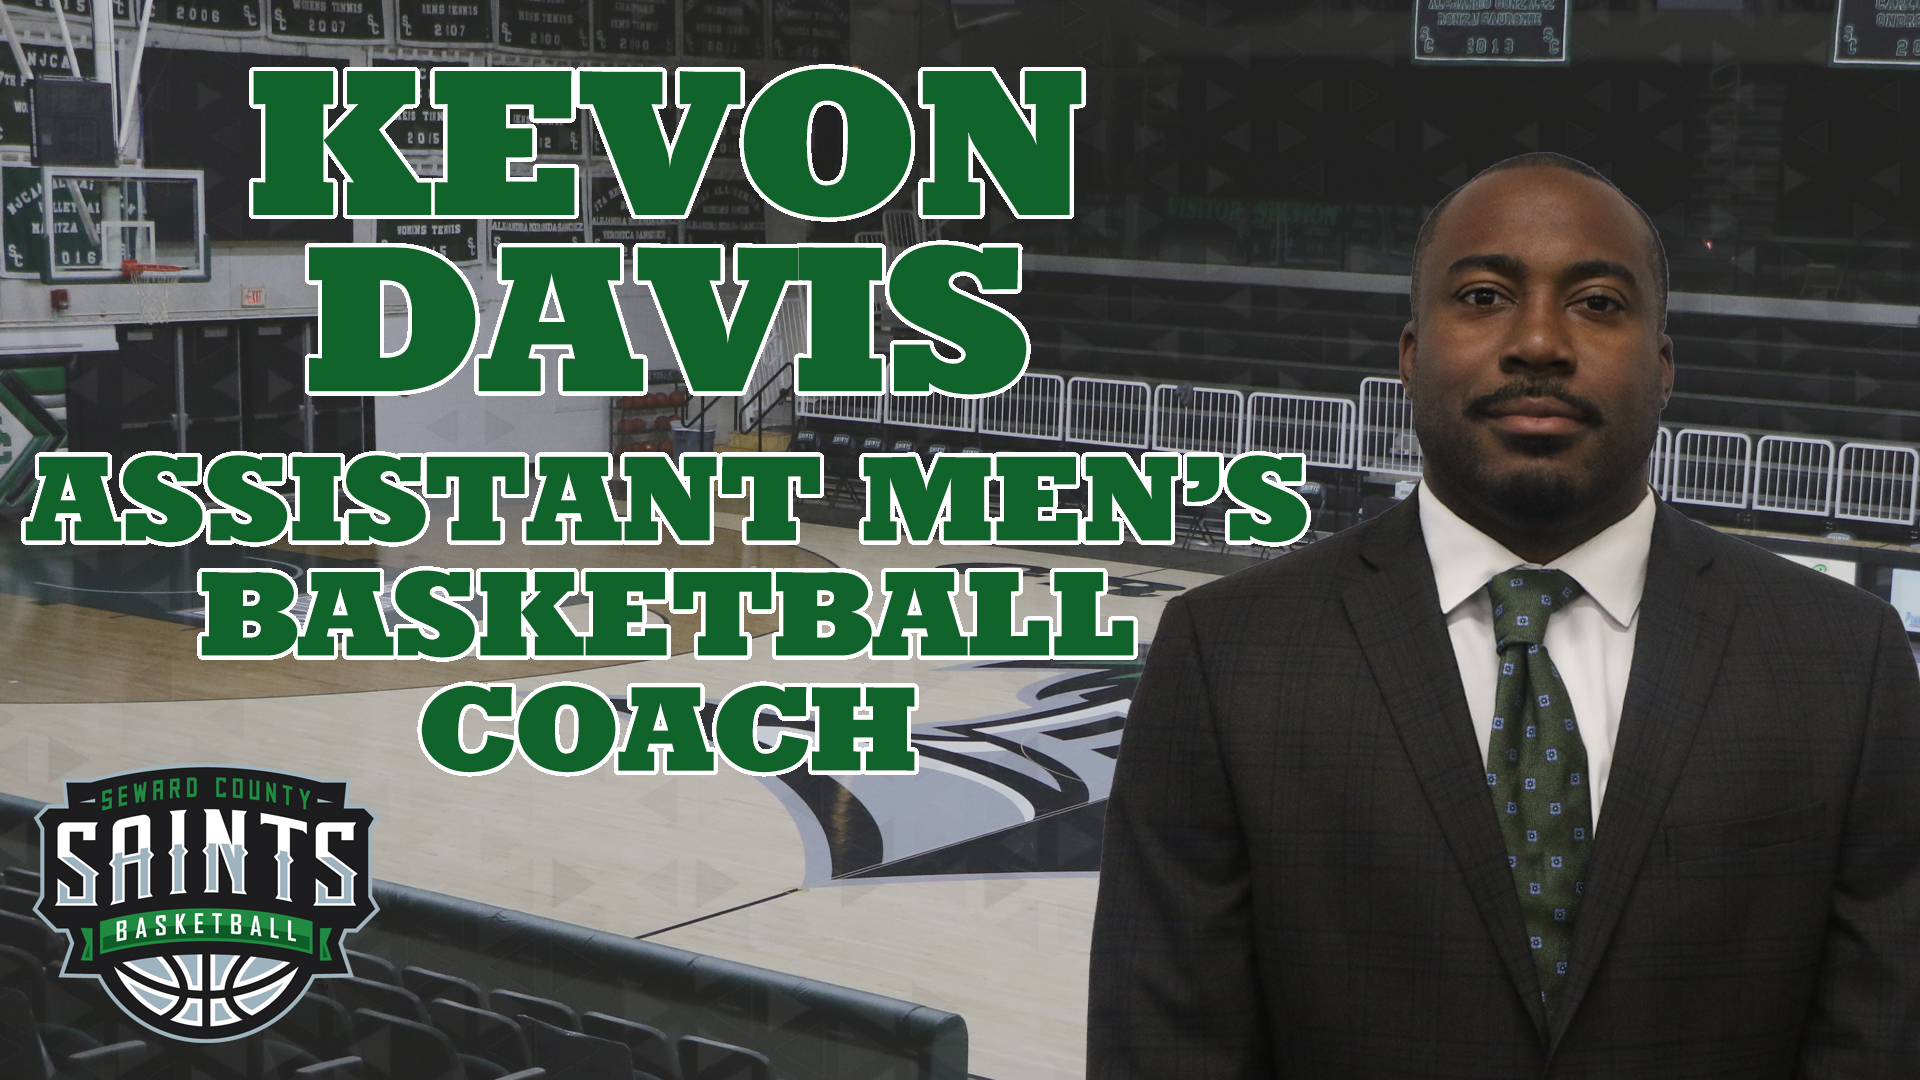 Davis named assistant men's basketball coach